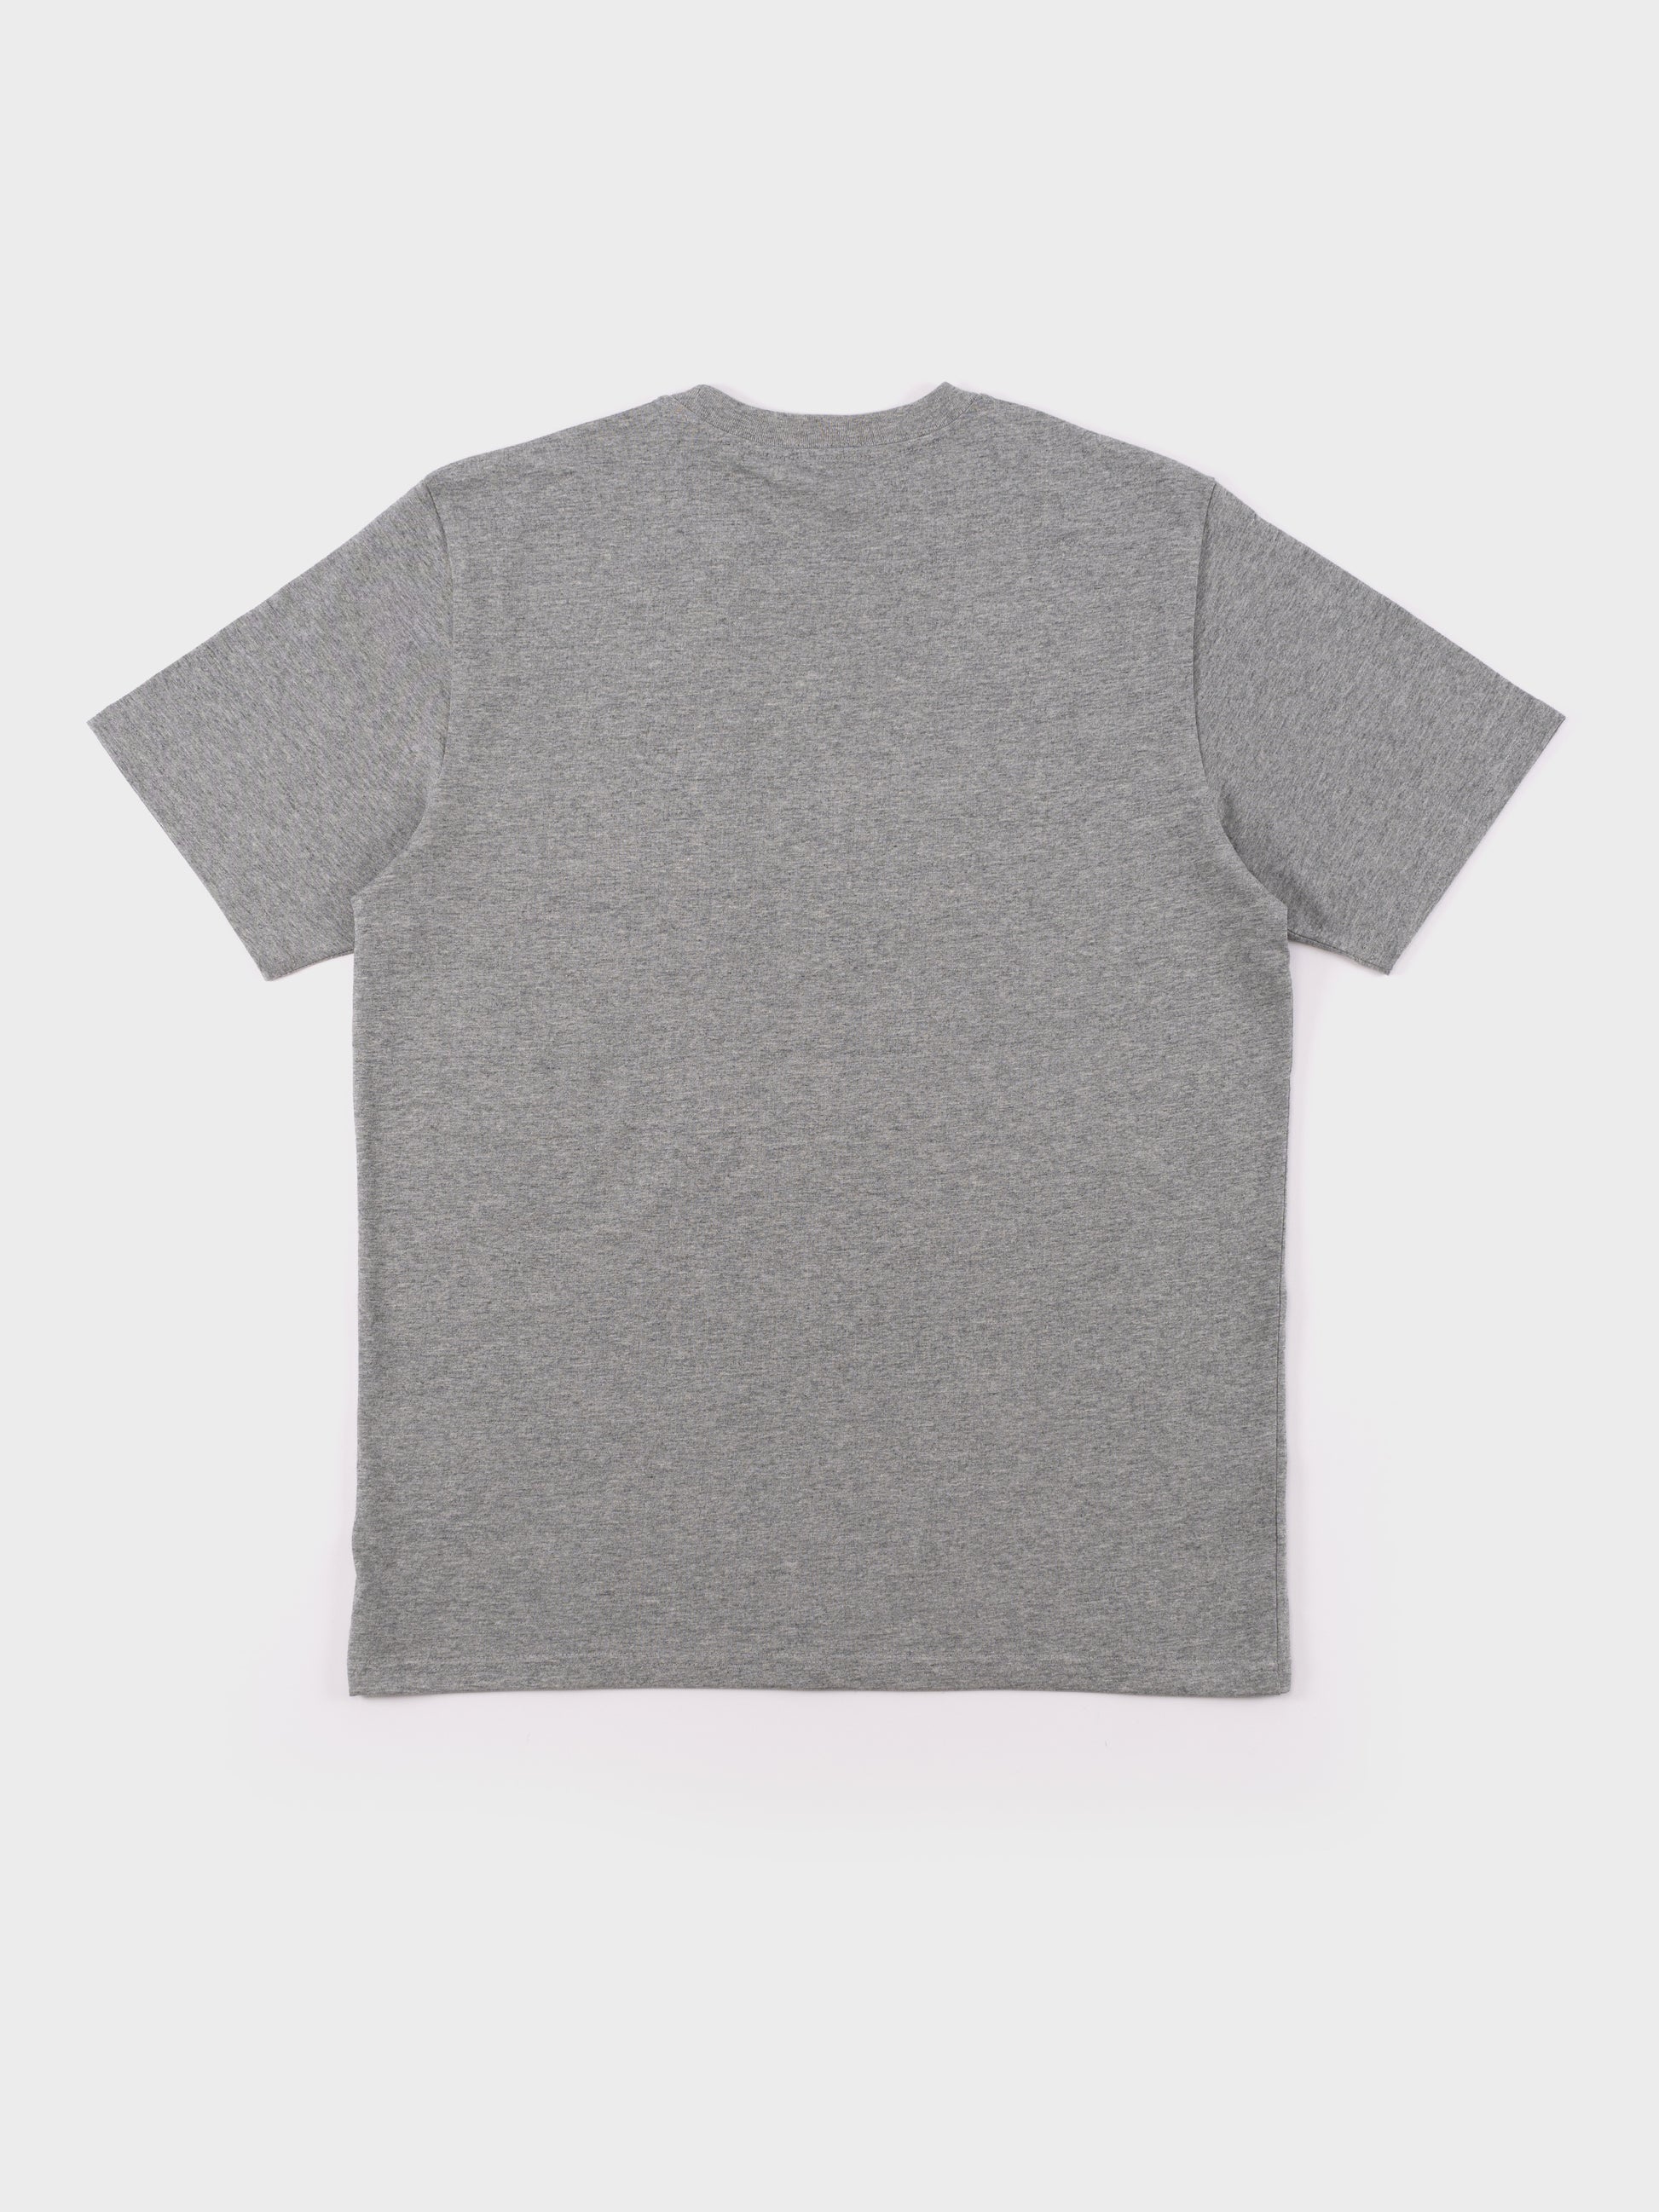 Carhartt S/S Pocket T Shirt - Grey Heather